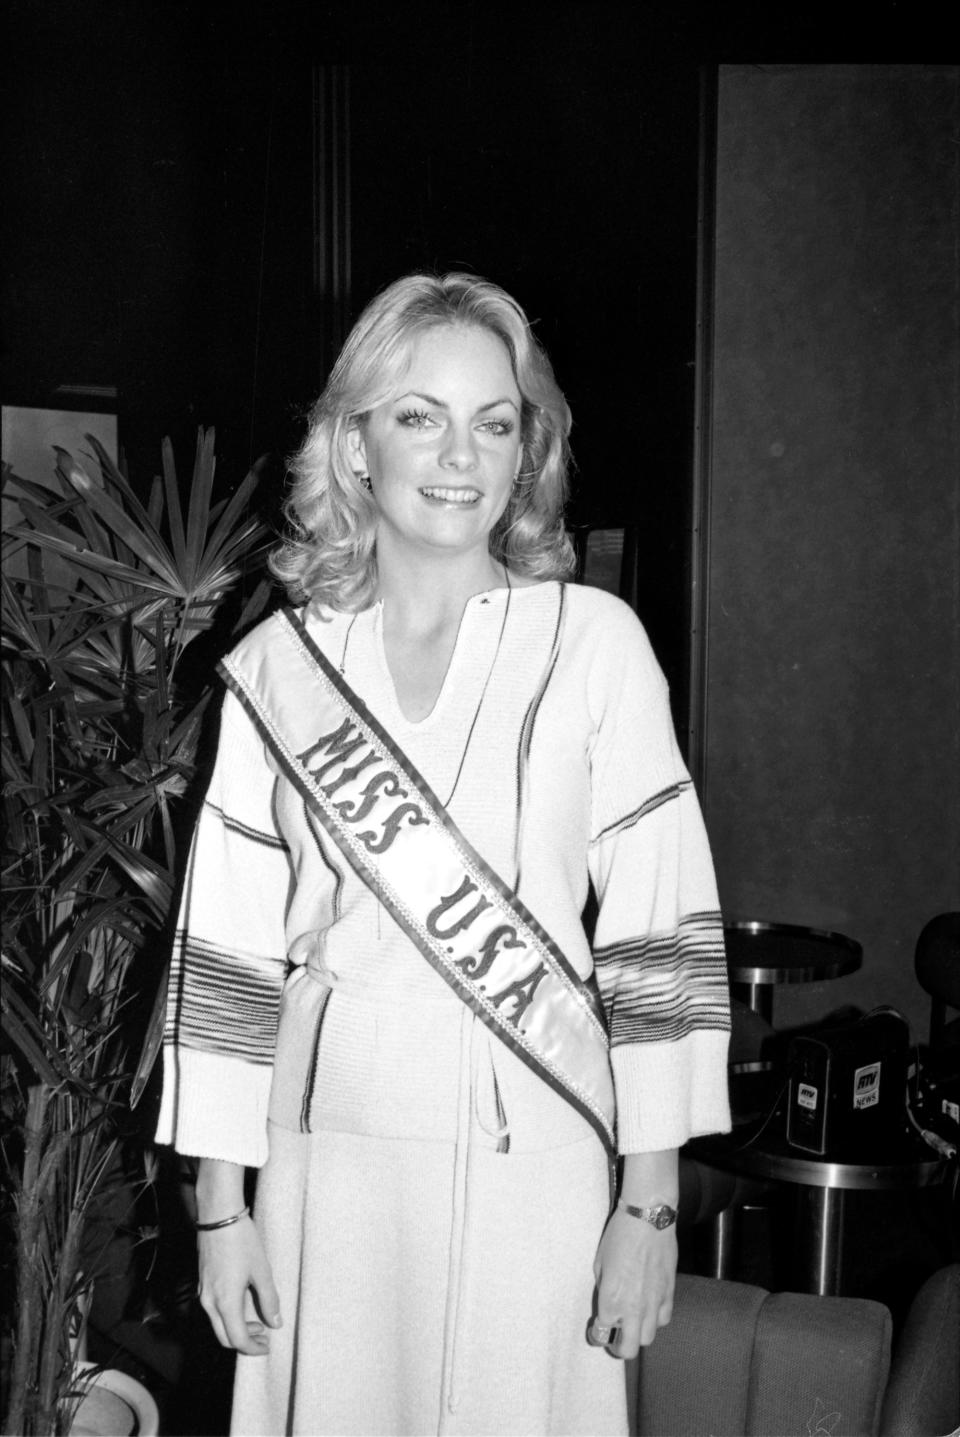 Miss USA 1977 Kimberly Tomes smiles wearing her sash.